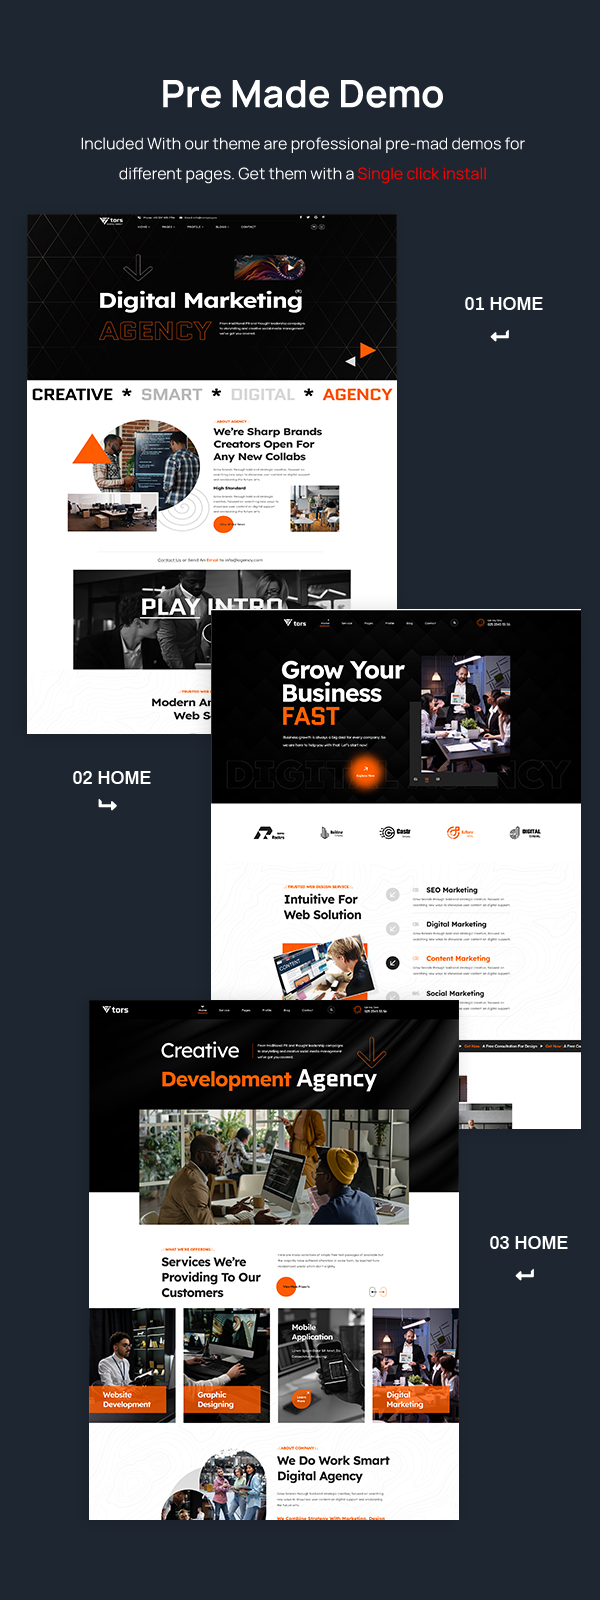 Vitors – Digital Marketing Agency WordPress Theme - 6